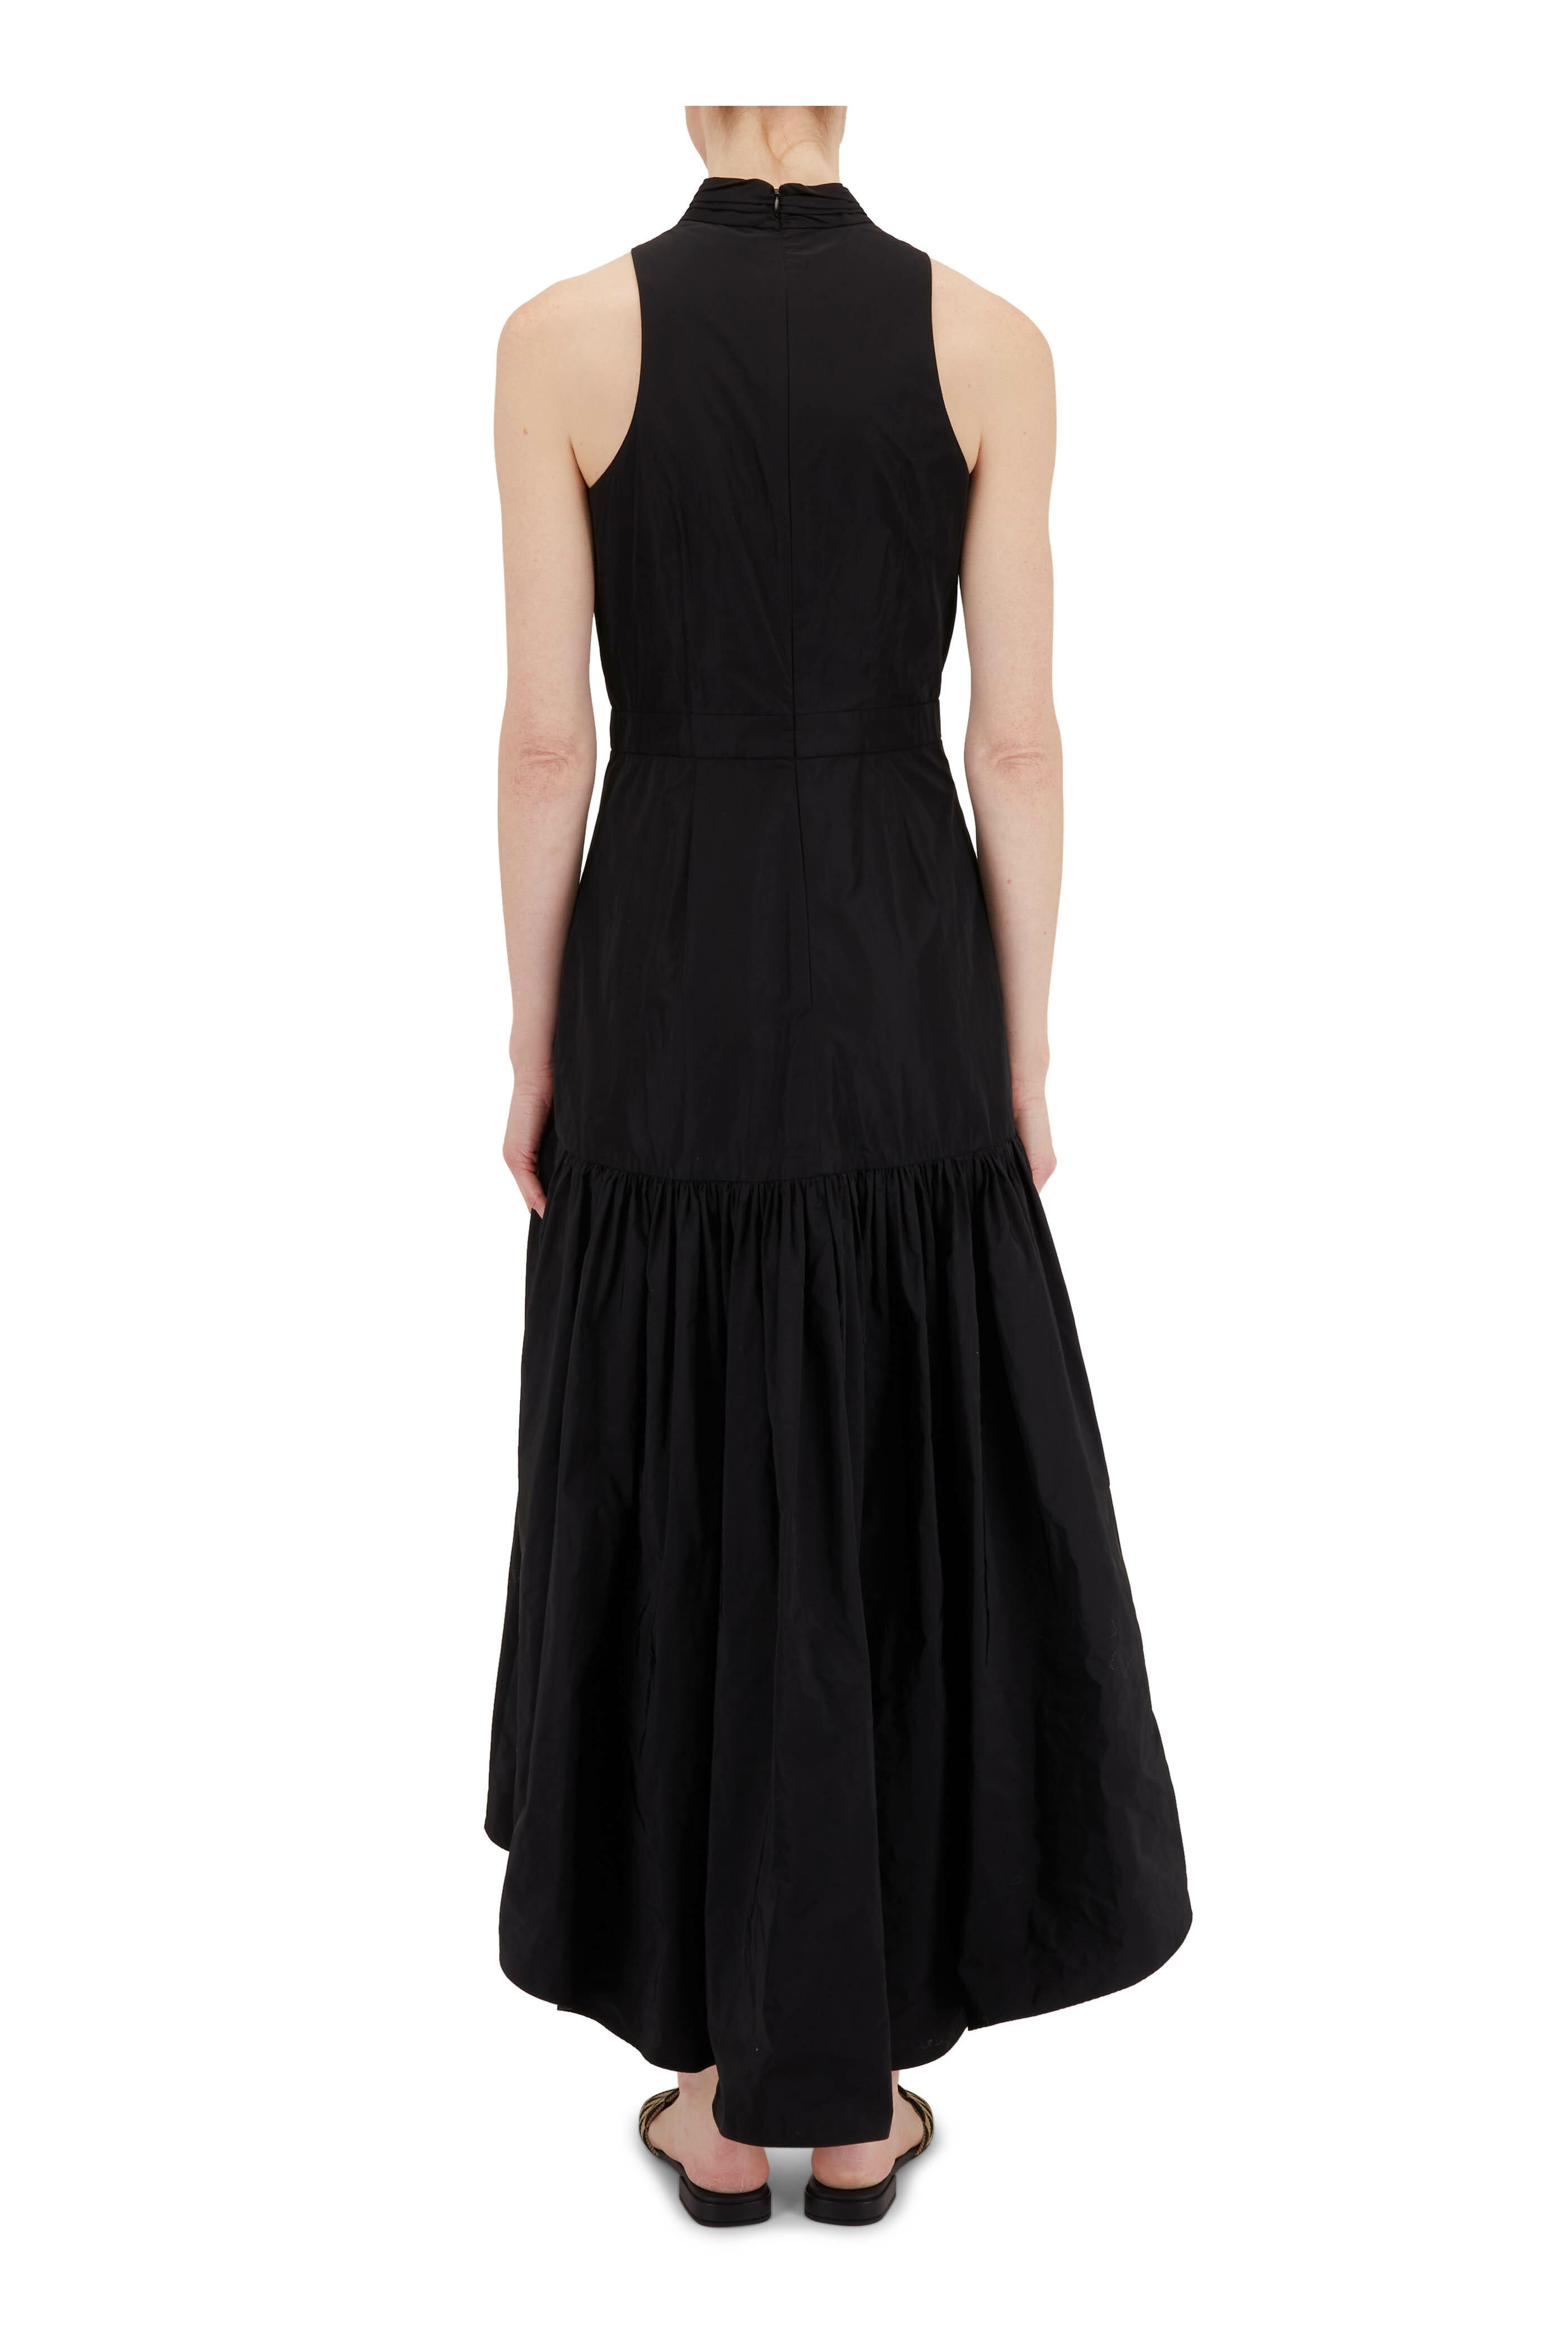 Veronica Beard - Radley Black Dress | Mitchell Stores